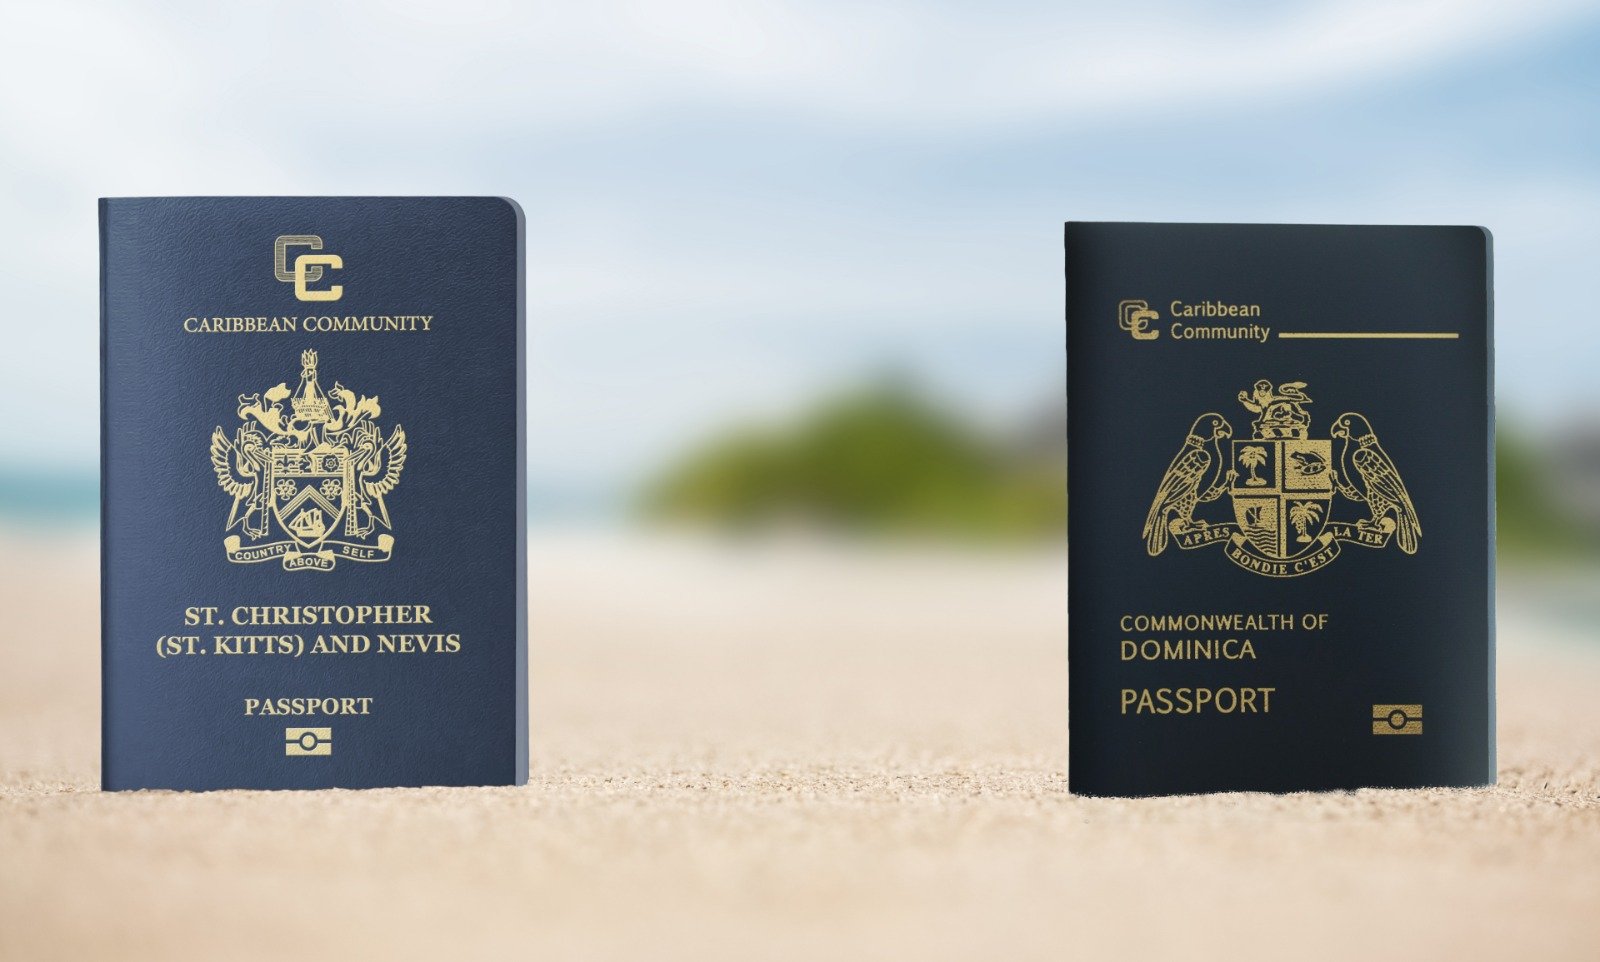 Доминика и Сент-Китс и Невис занимают сейчас первое место на рынке по программам гражданства путем инвестиций